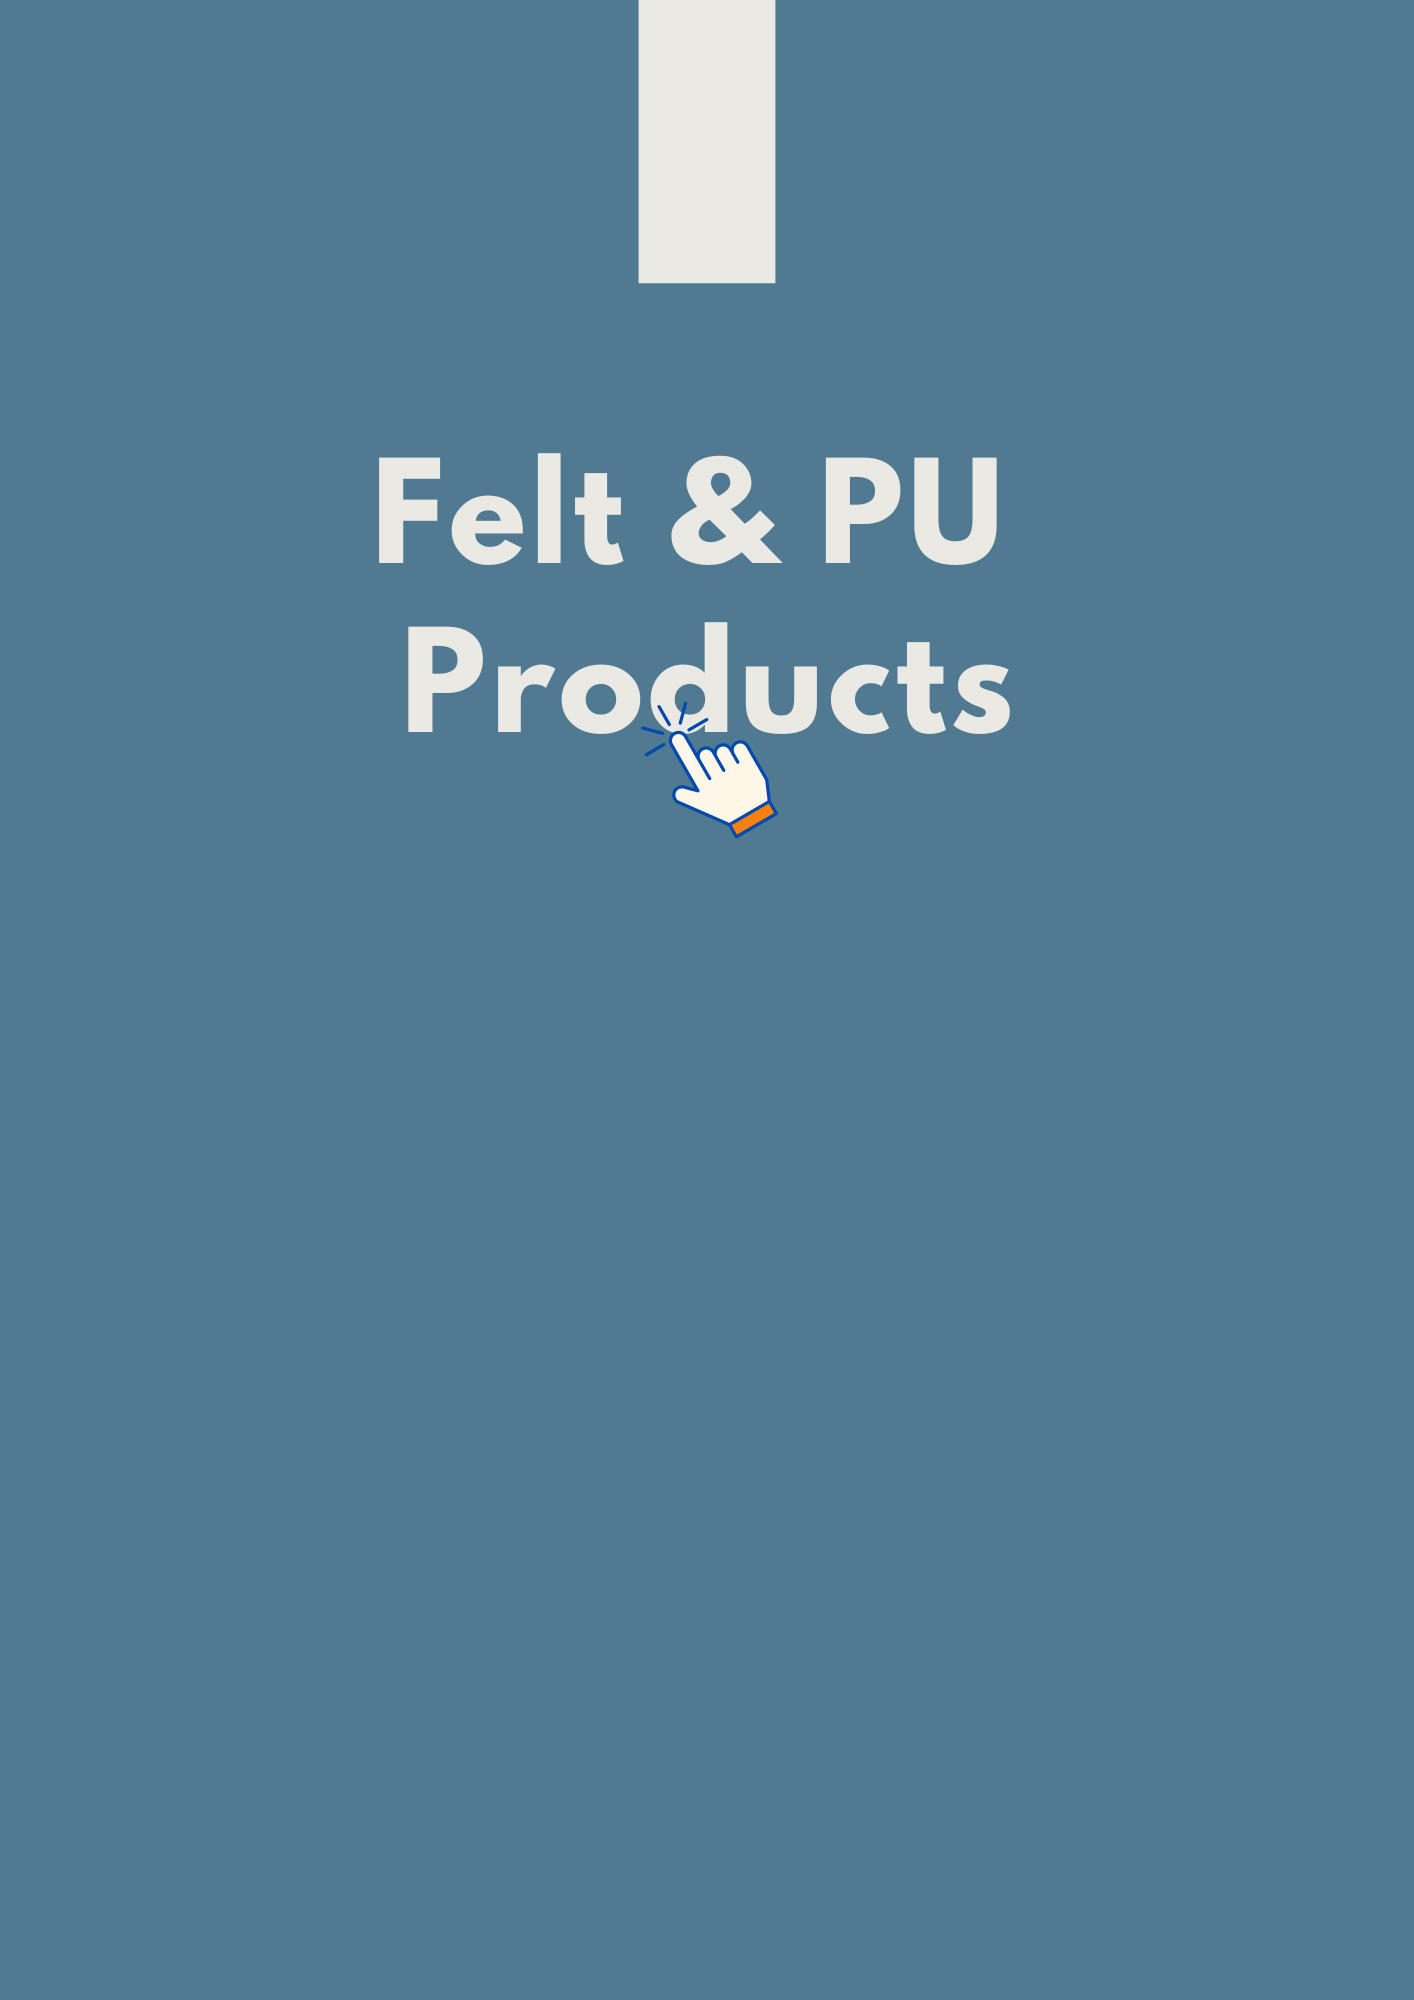 Download our Felt & PU catalog